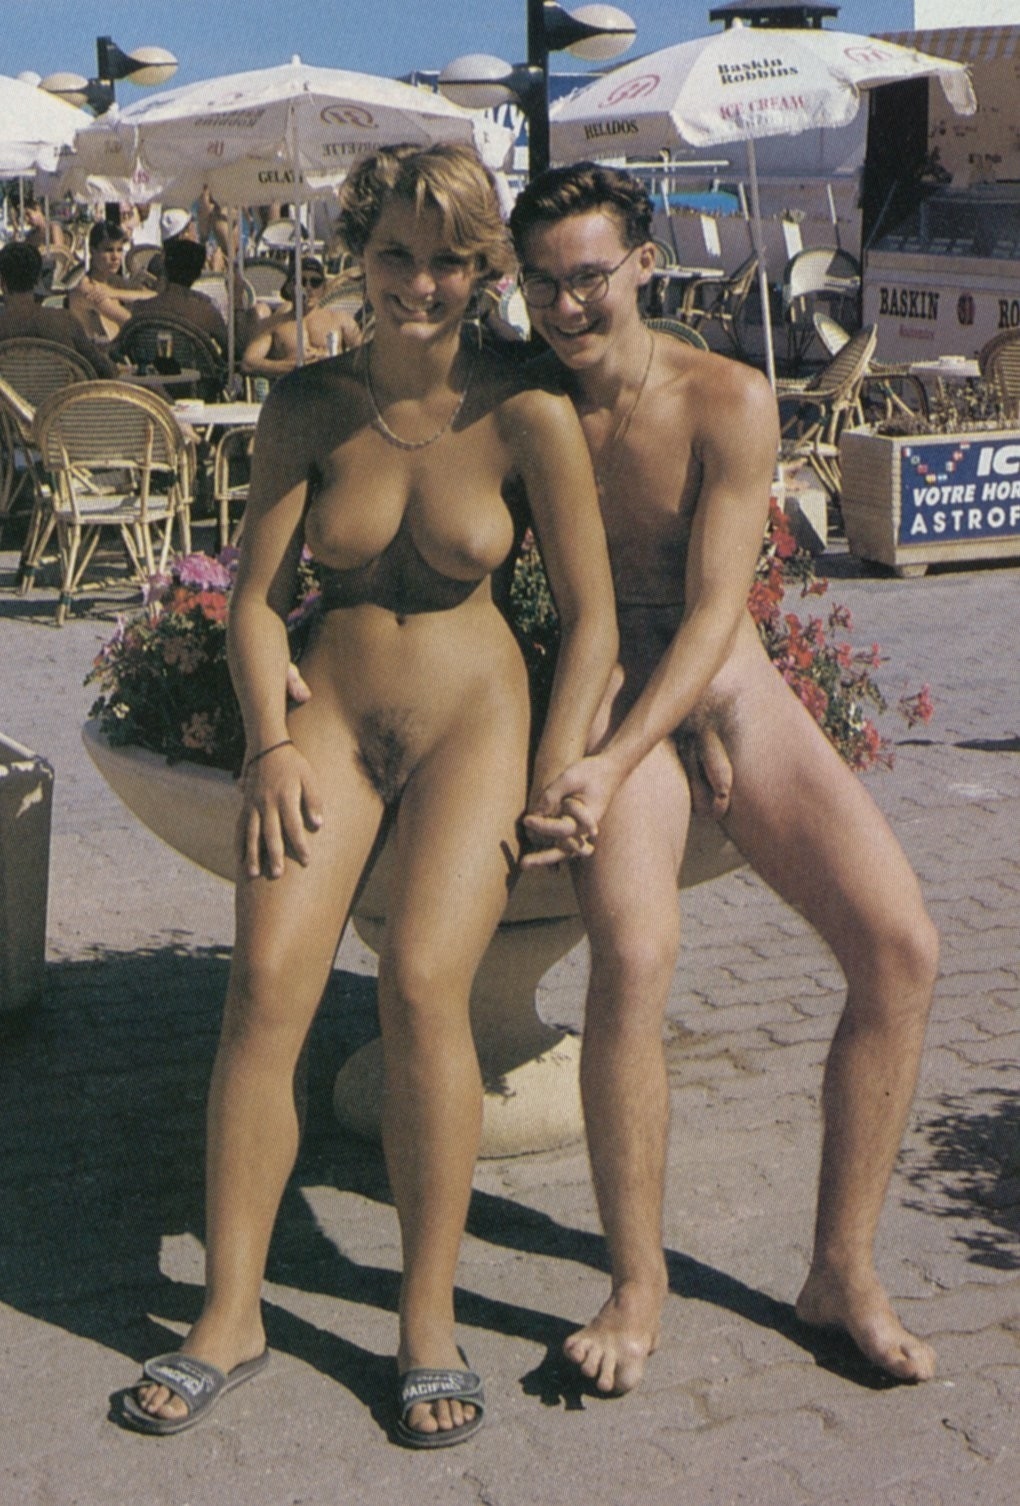 https://www.nudismlife.com/galleries/nudists_and_nude/nudists_couple/nudists_nude_naturists_couple_1875.jpg